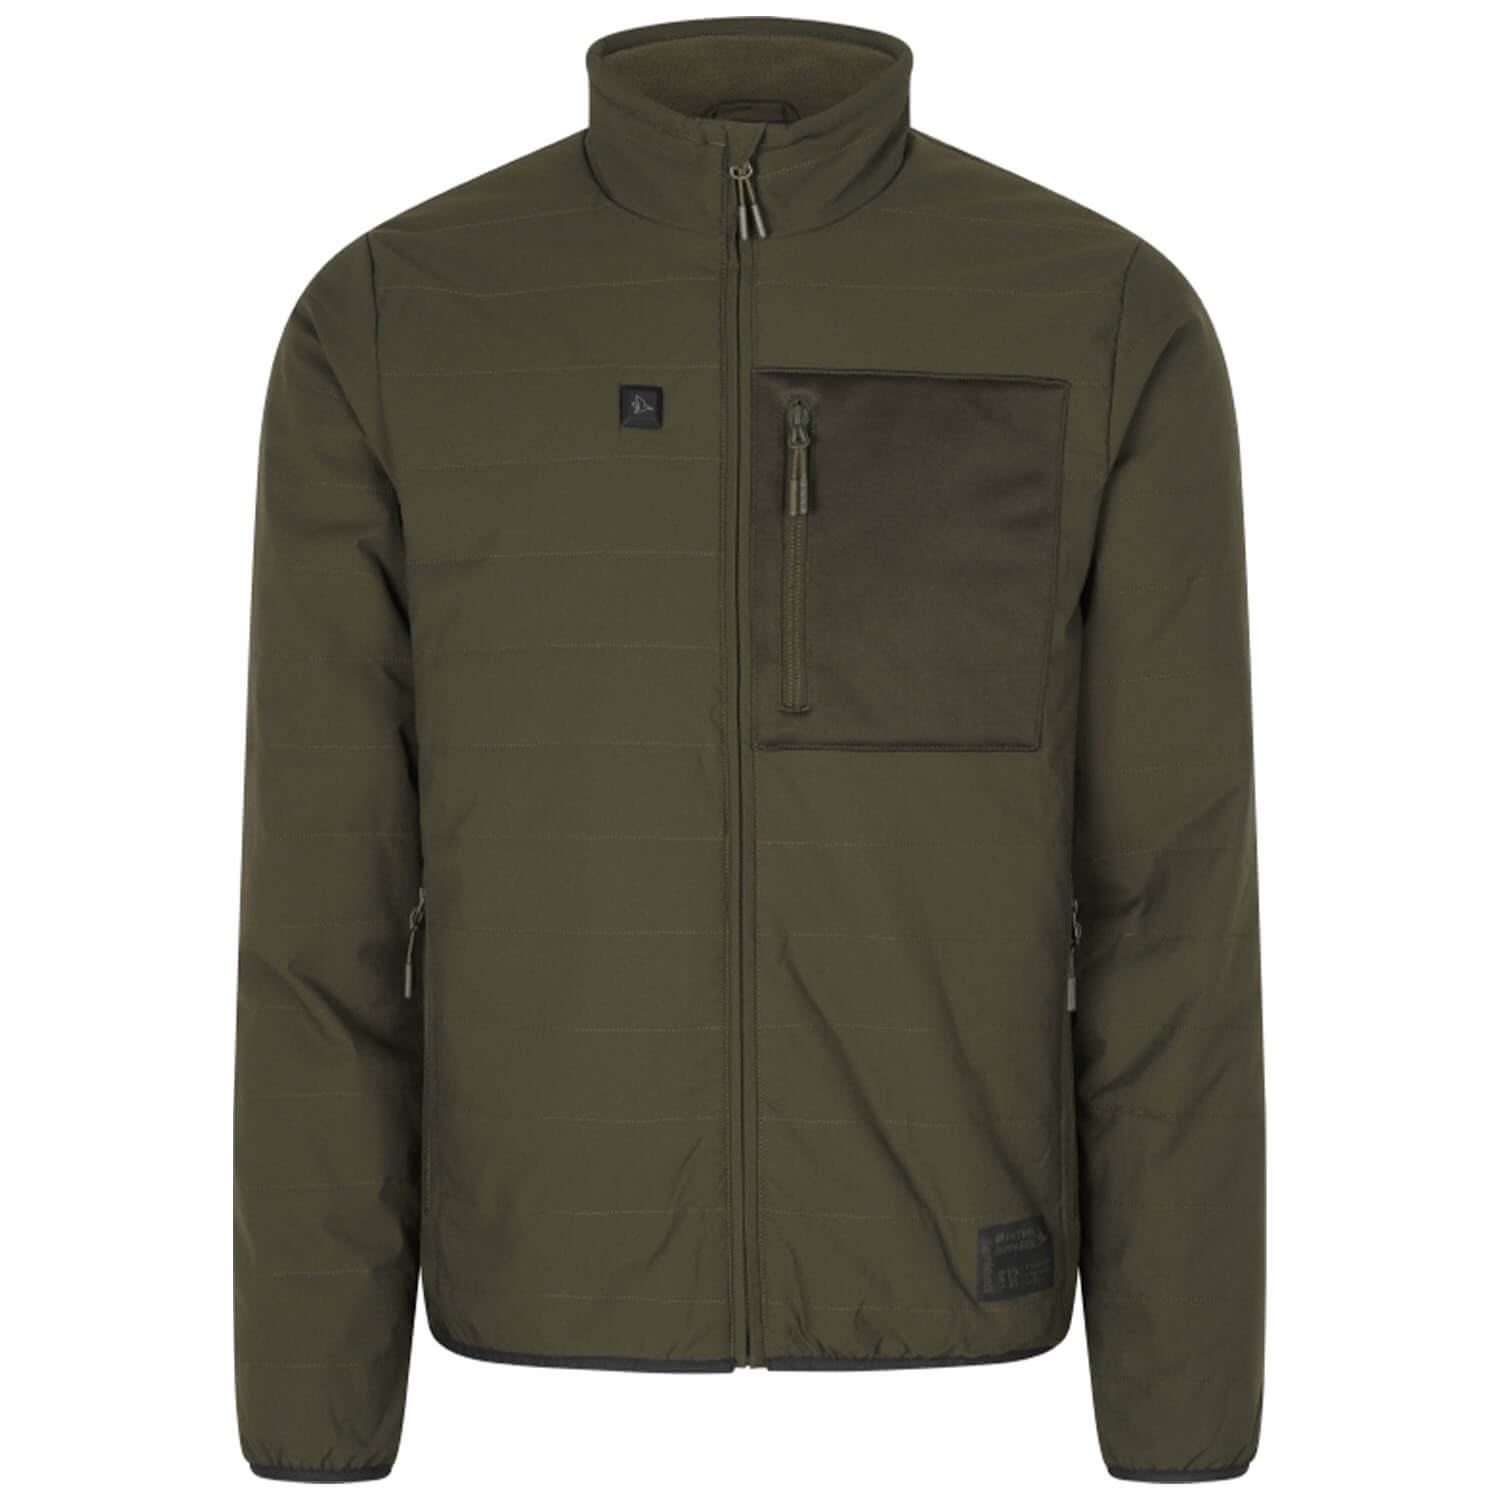 Seeland heat jacket celsius (Pine Green) - Heated Clothing